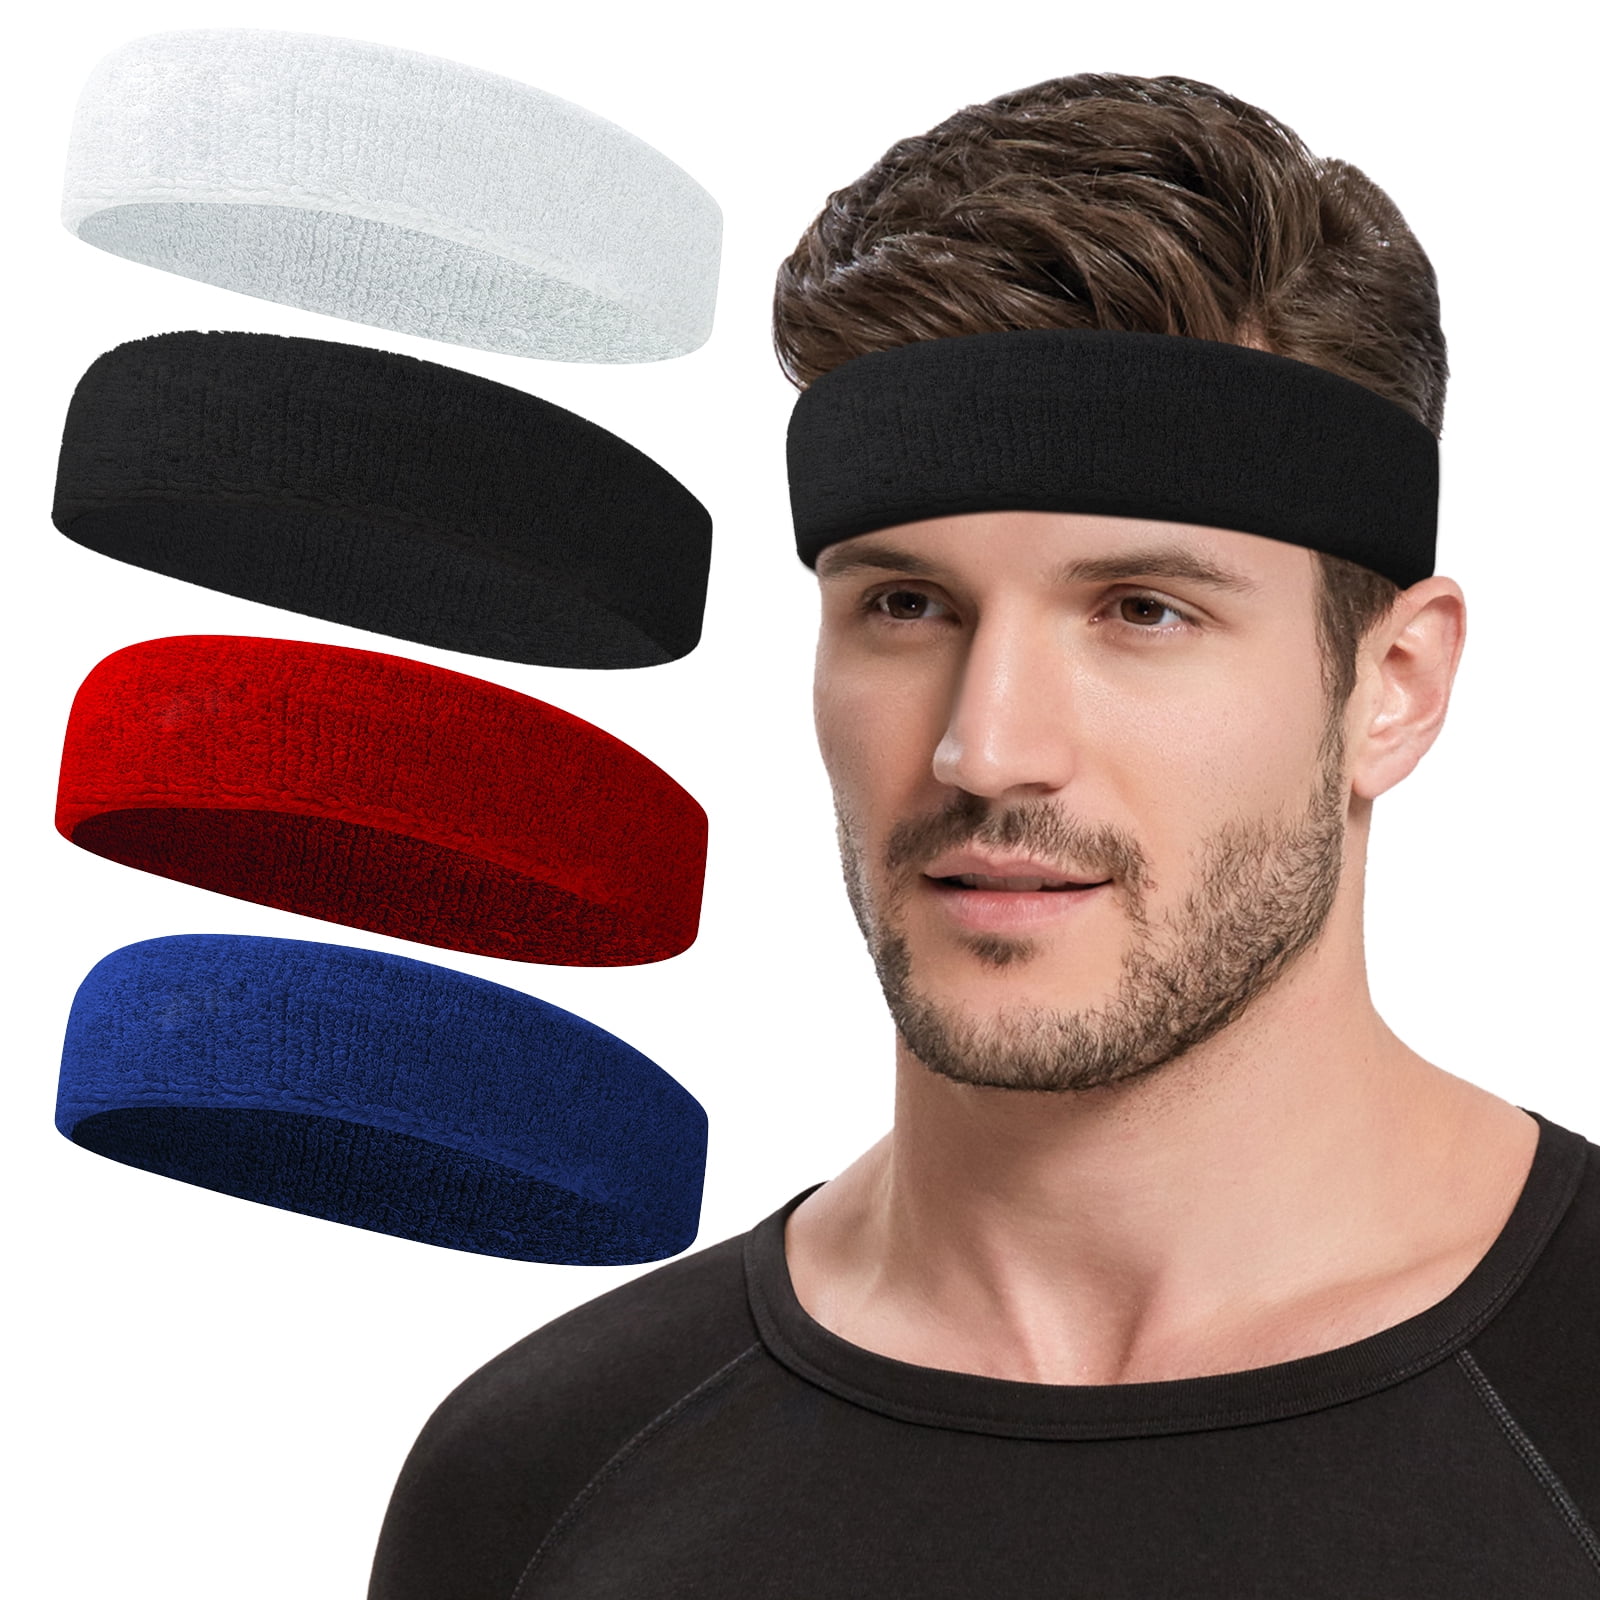 Joyfree Workout Headbands for Women Men Sweatband Yoga Sweat Bands